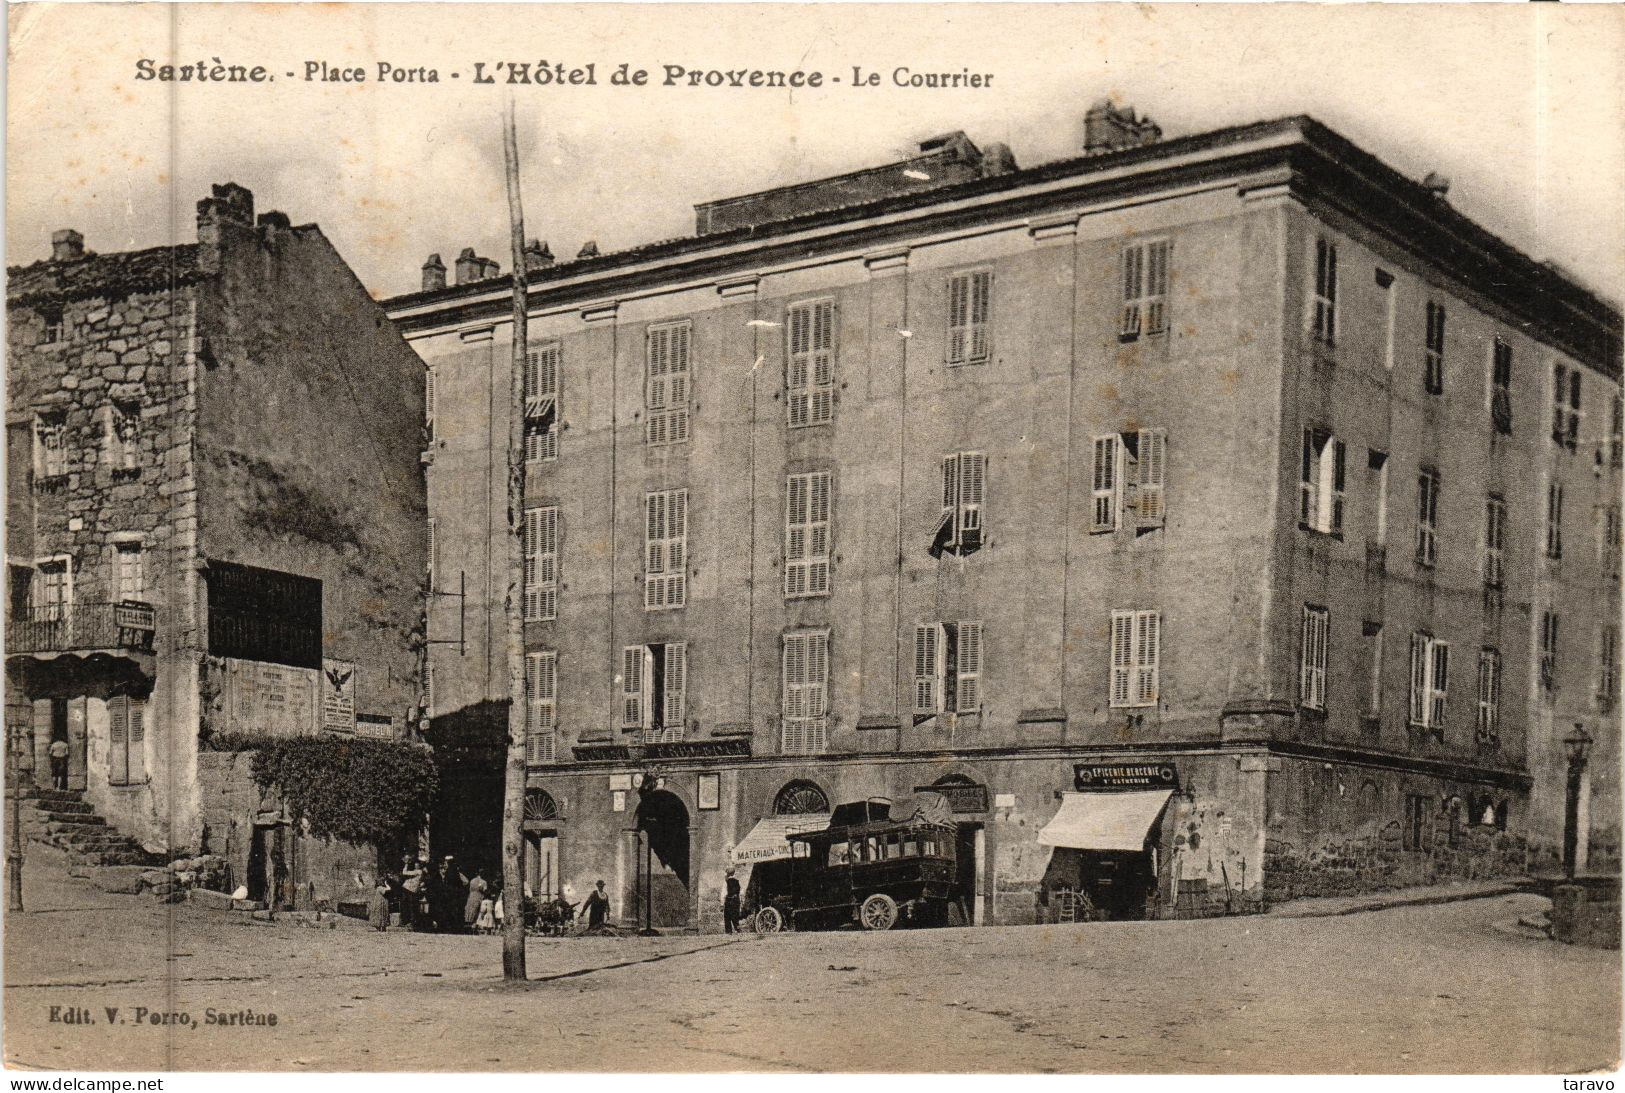 CORSE - SARTENE - L'HOTEL DE PROVENCE (Place Porta) - LE COURRIER - Epicerie-Mercerie - V. Porro - Sartene